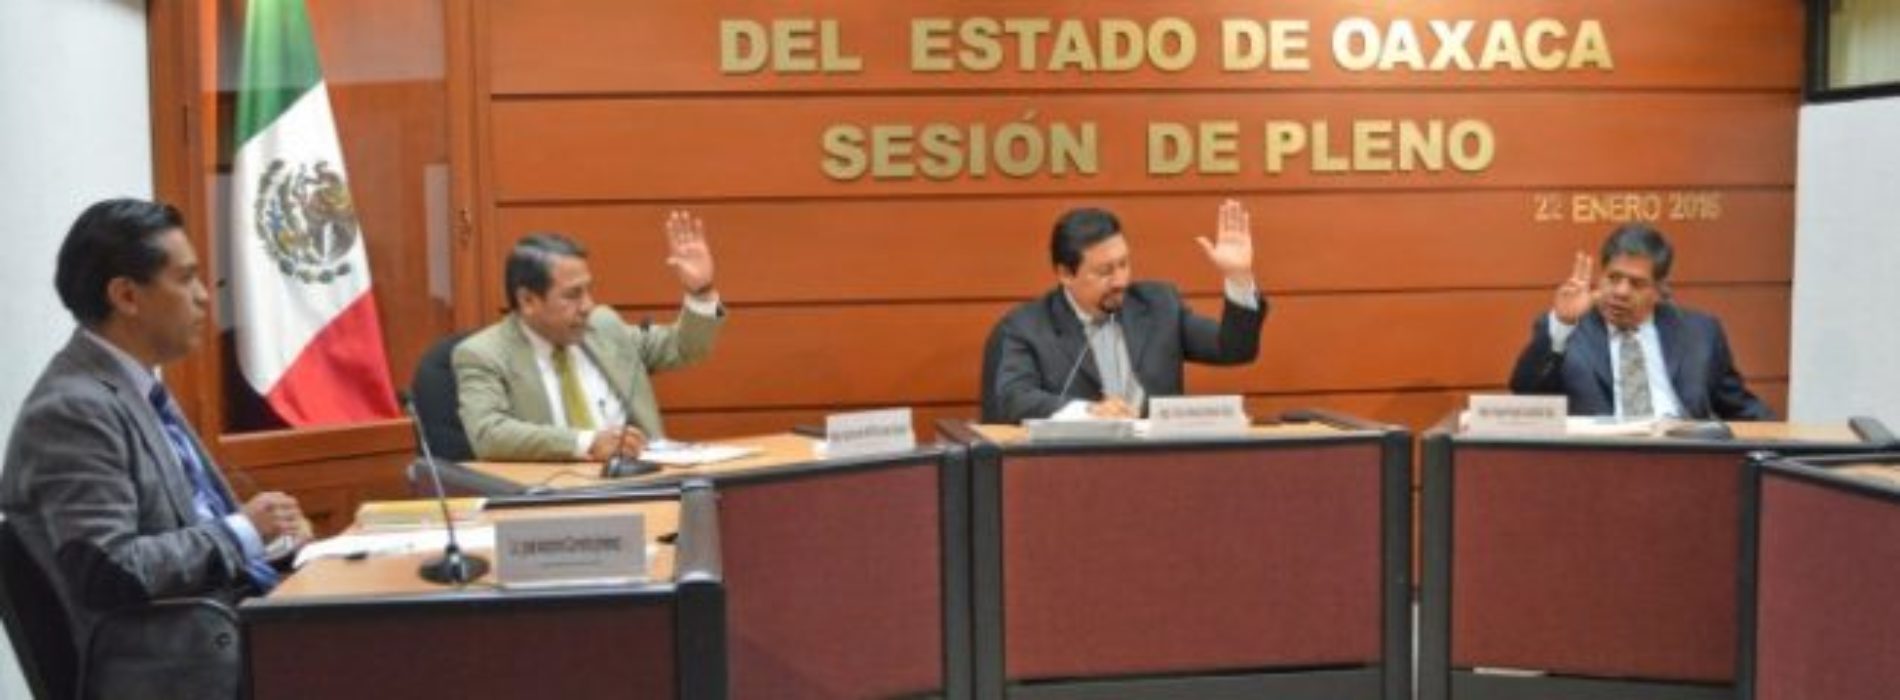 Quitan siete diputaciones plurinominales a Morena en
Oaxaca